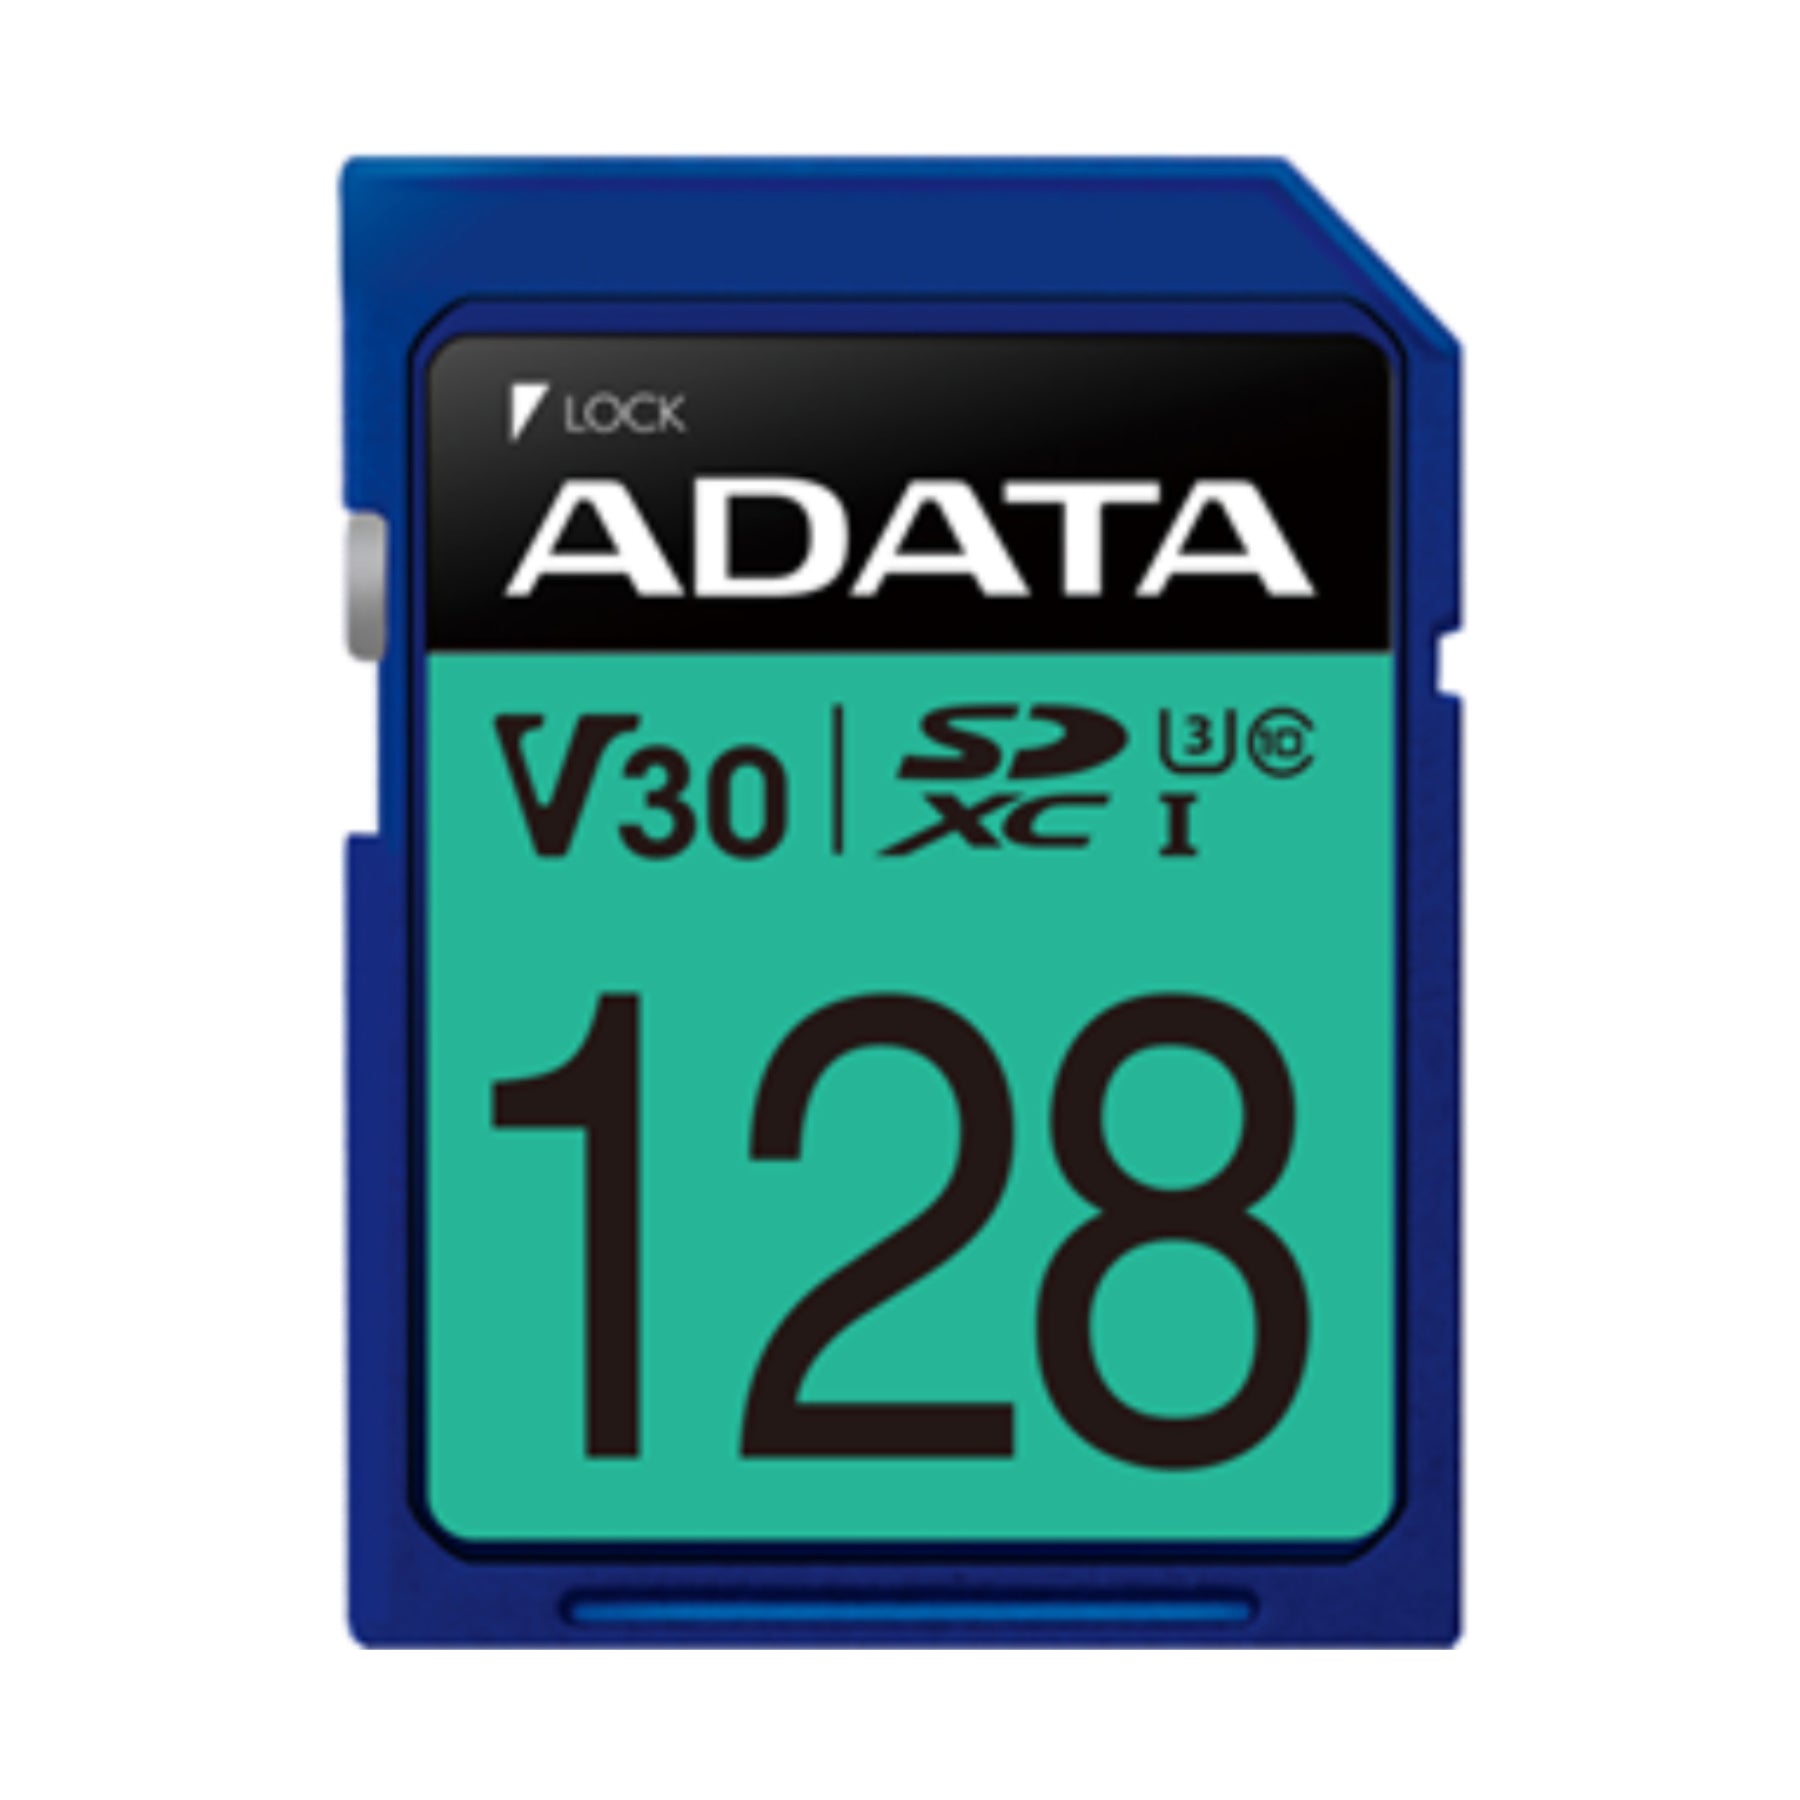 Hire Adata 128gb SD card v30 at Topic Rentals